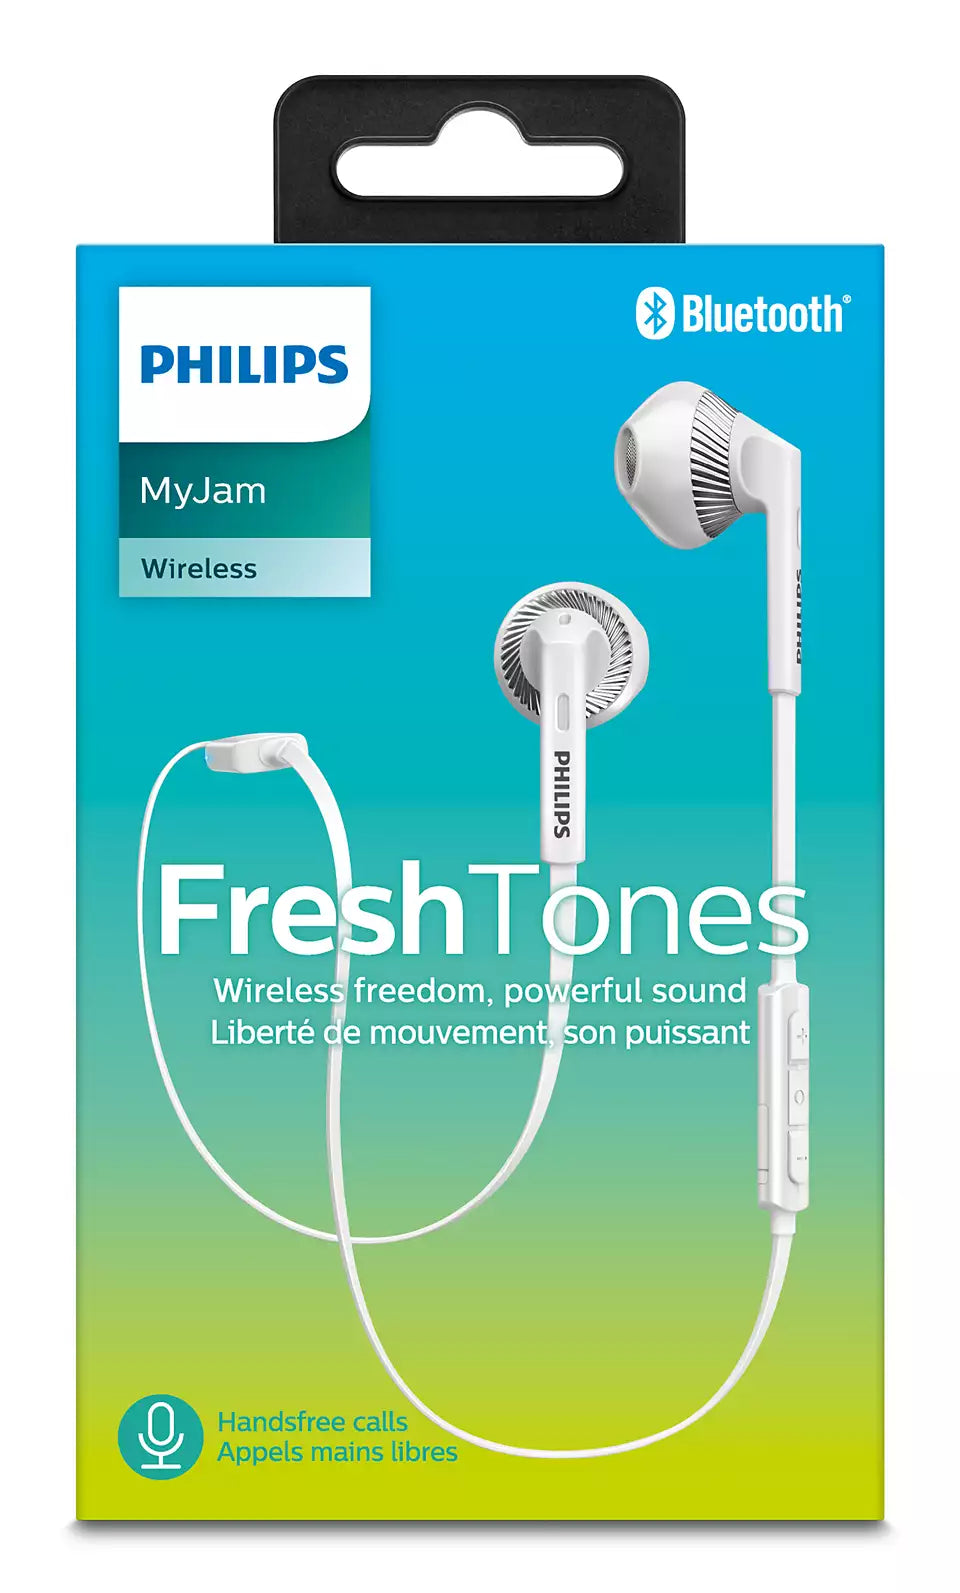 Philips Myjam FreshTones - Trådlöst in-ear Bluetooth-headset